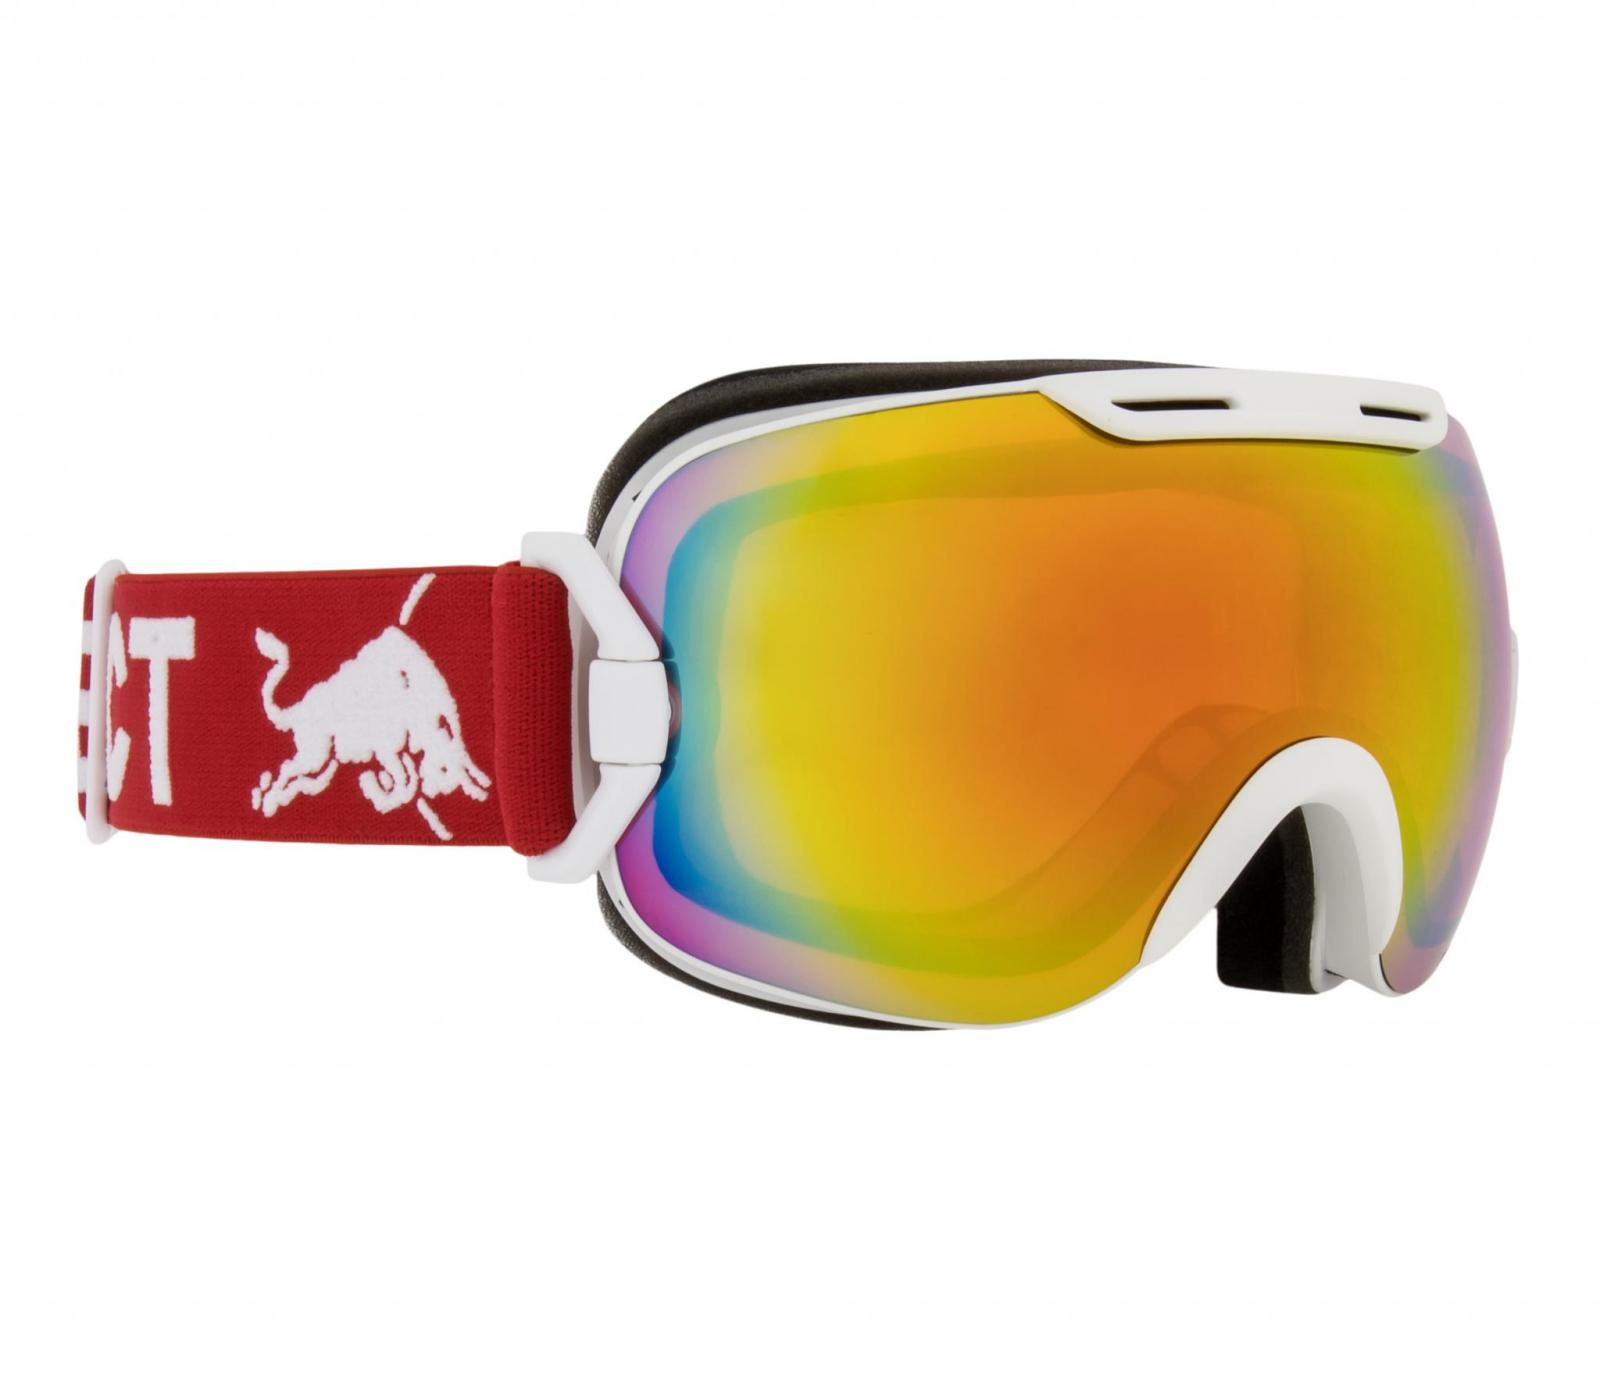 masque ski red bull spect solo-005 BU2 red bull eyewear :  -  Achat ski, vente matériel de ski, snowboard, vente blouson et pantalon ski  technique et accessoire montagne.